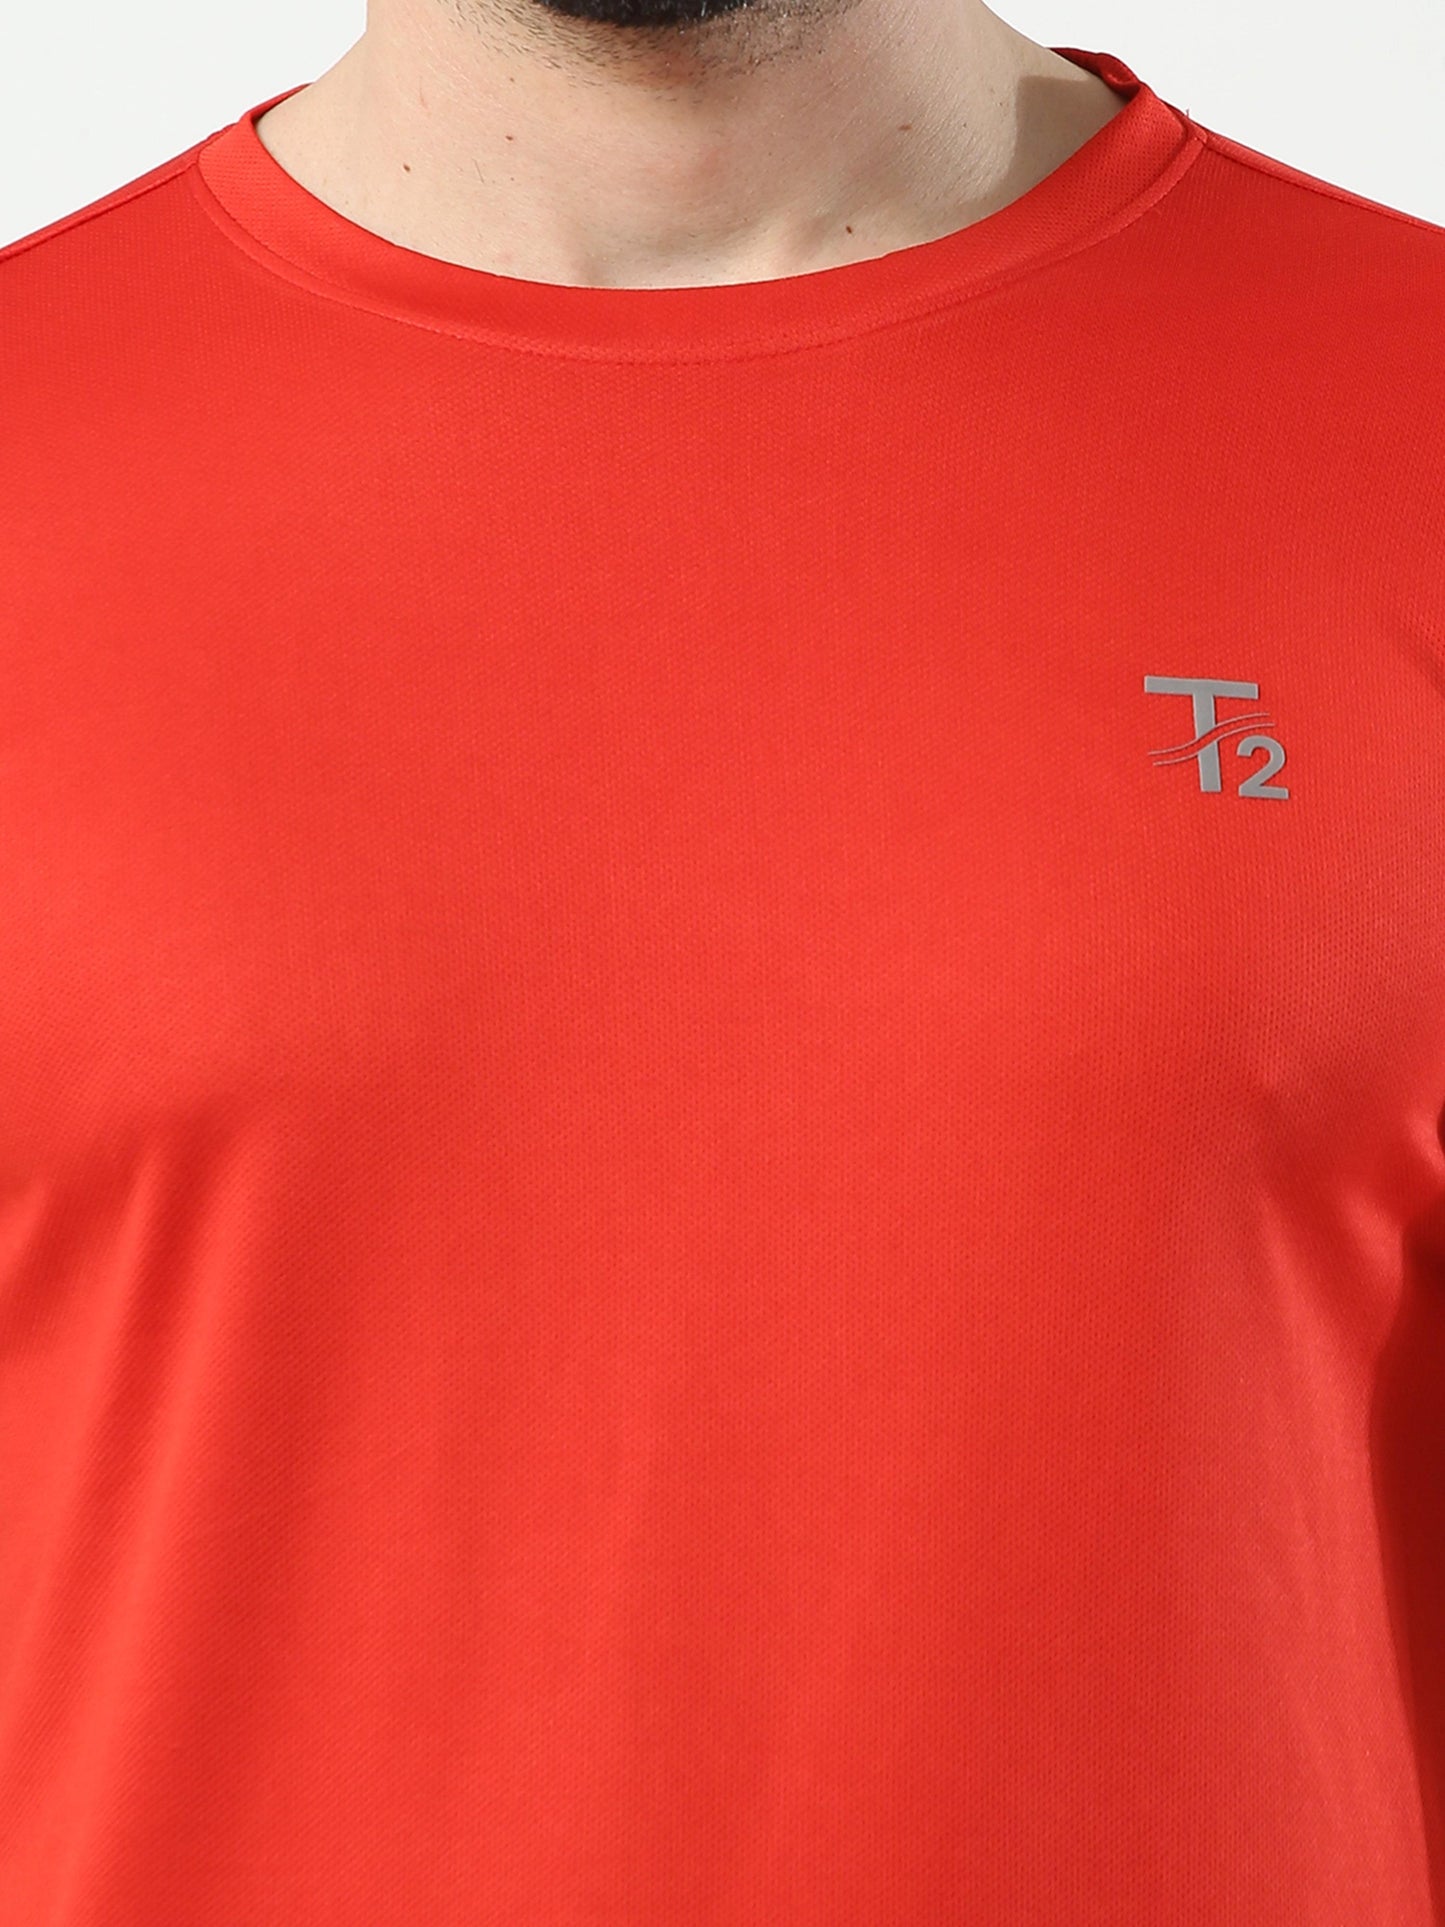 Athleisure Men's Premium T-Shirt - Red